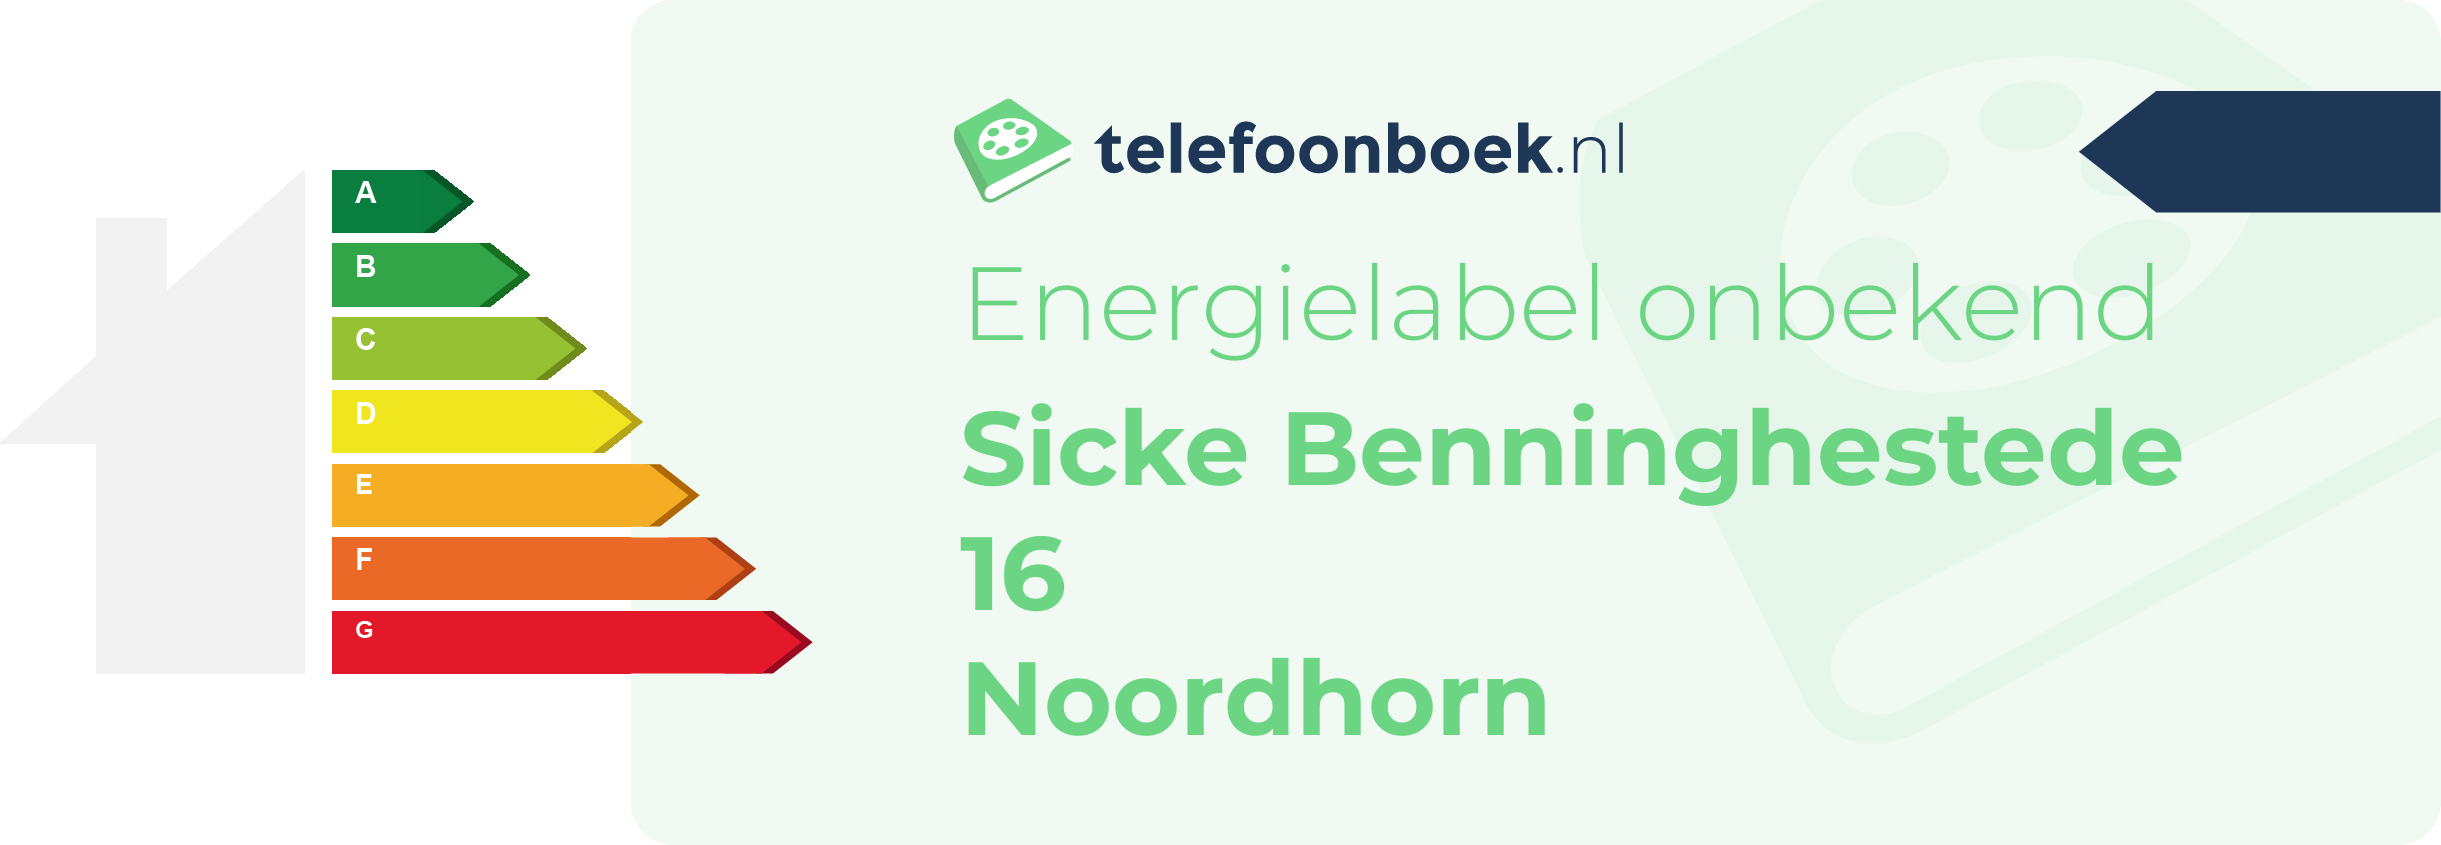 Energielabel Sicke Benninghestede 16 Noordhorn